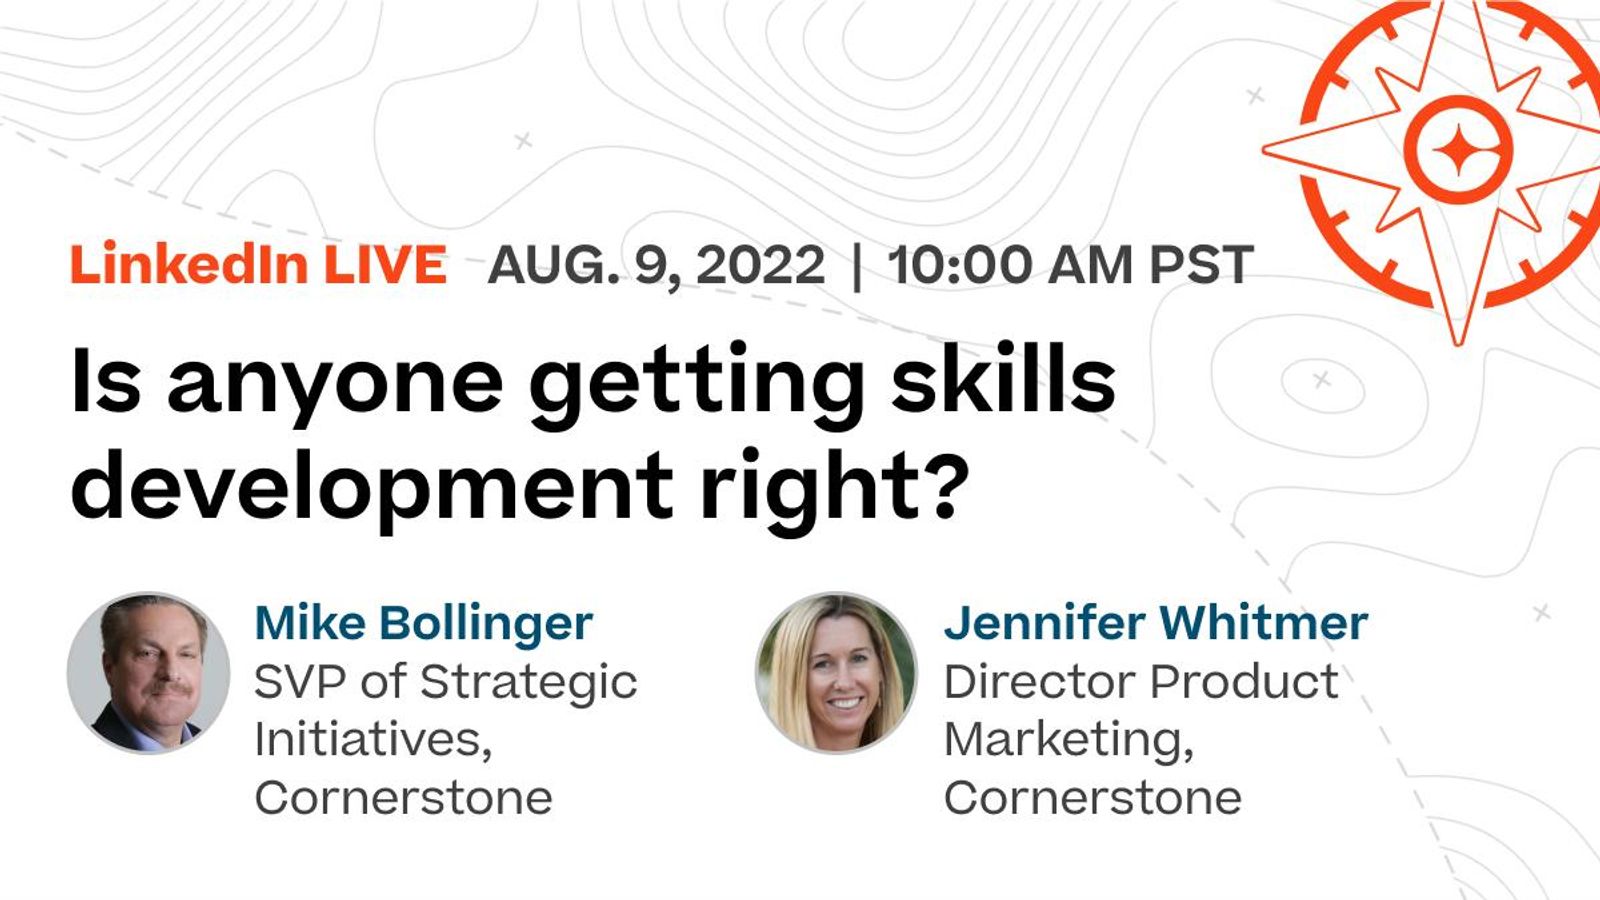 LinkedIn Live: is anyone getting skills development right?